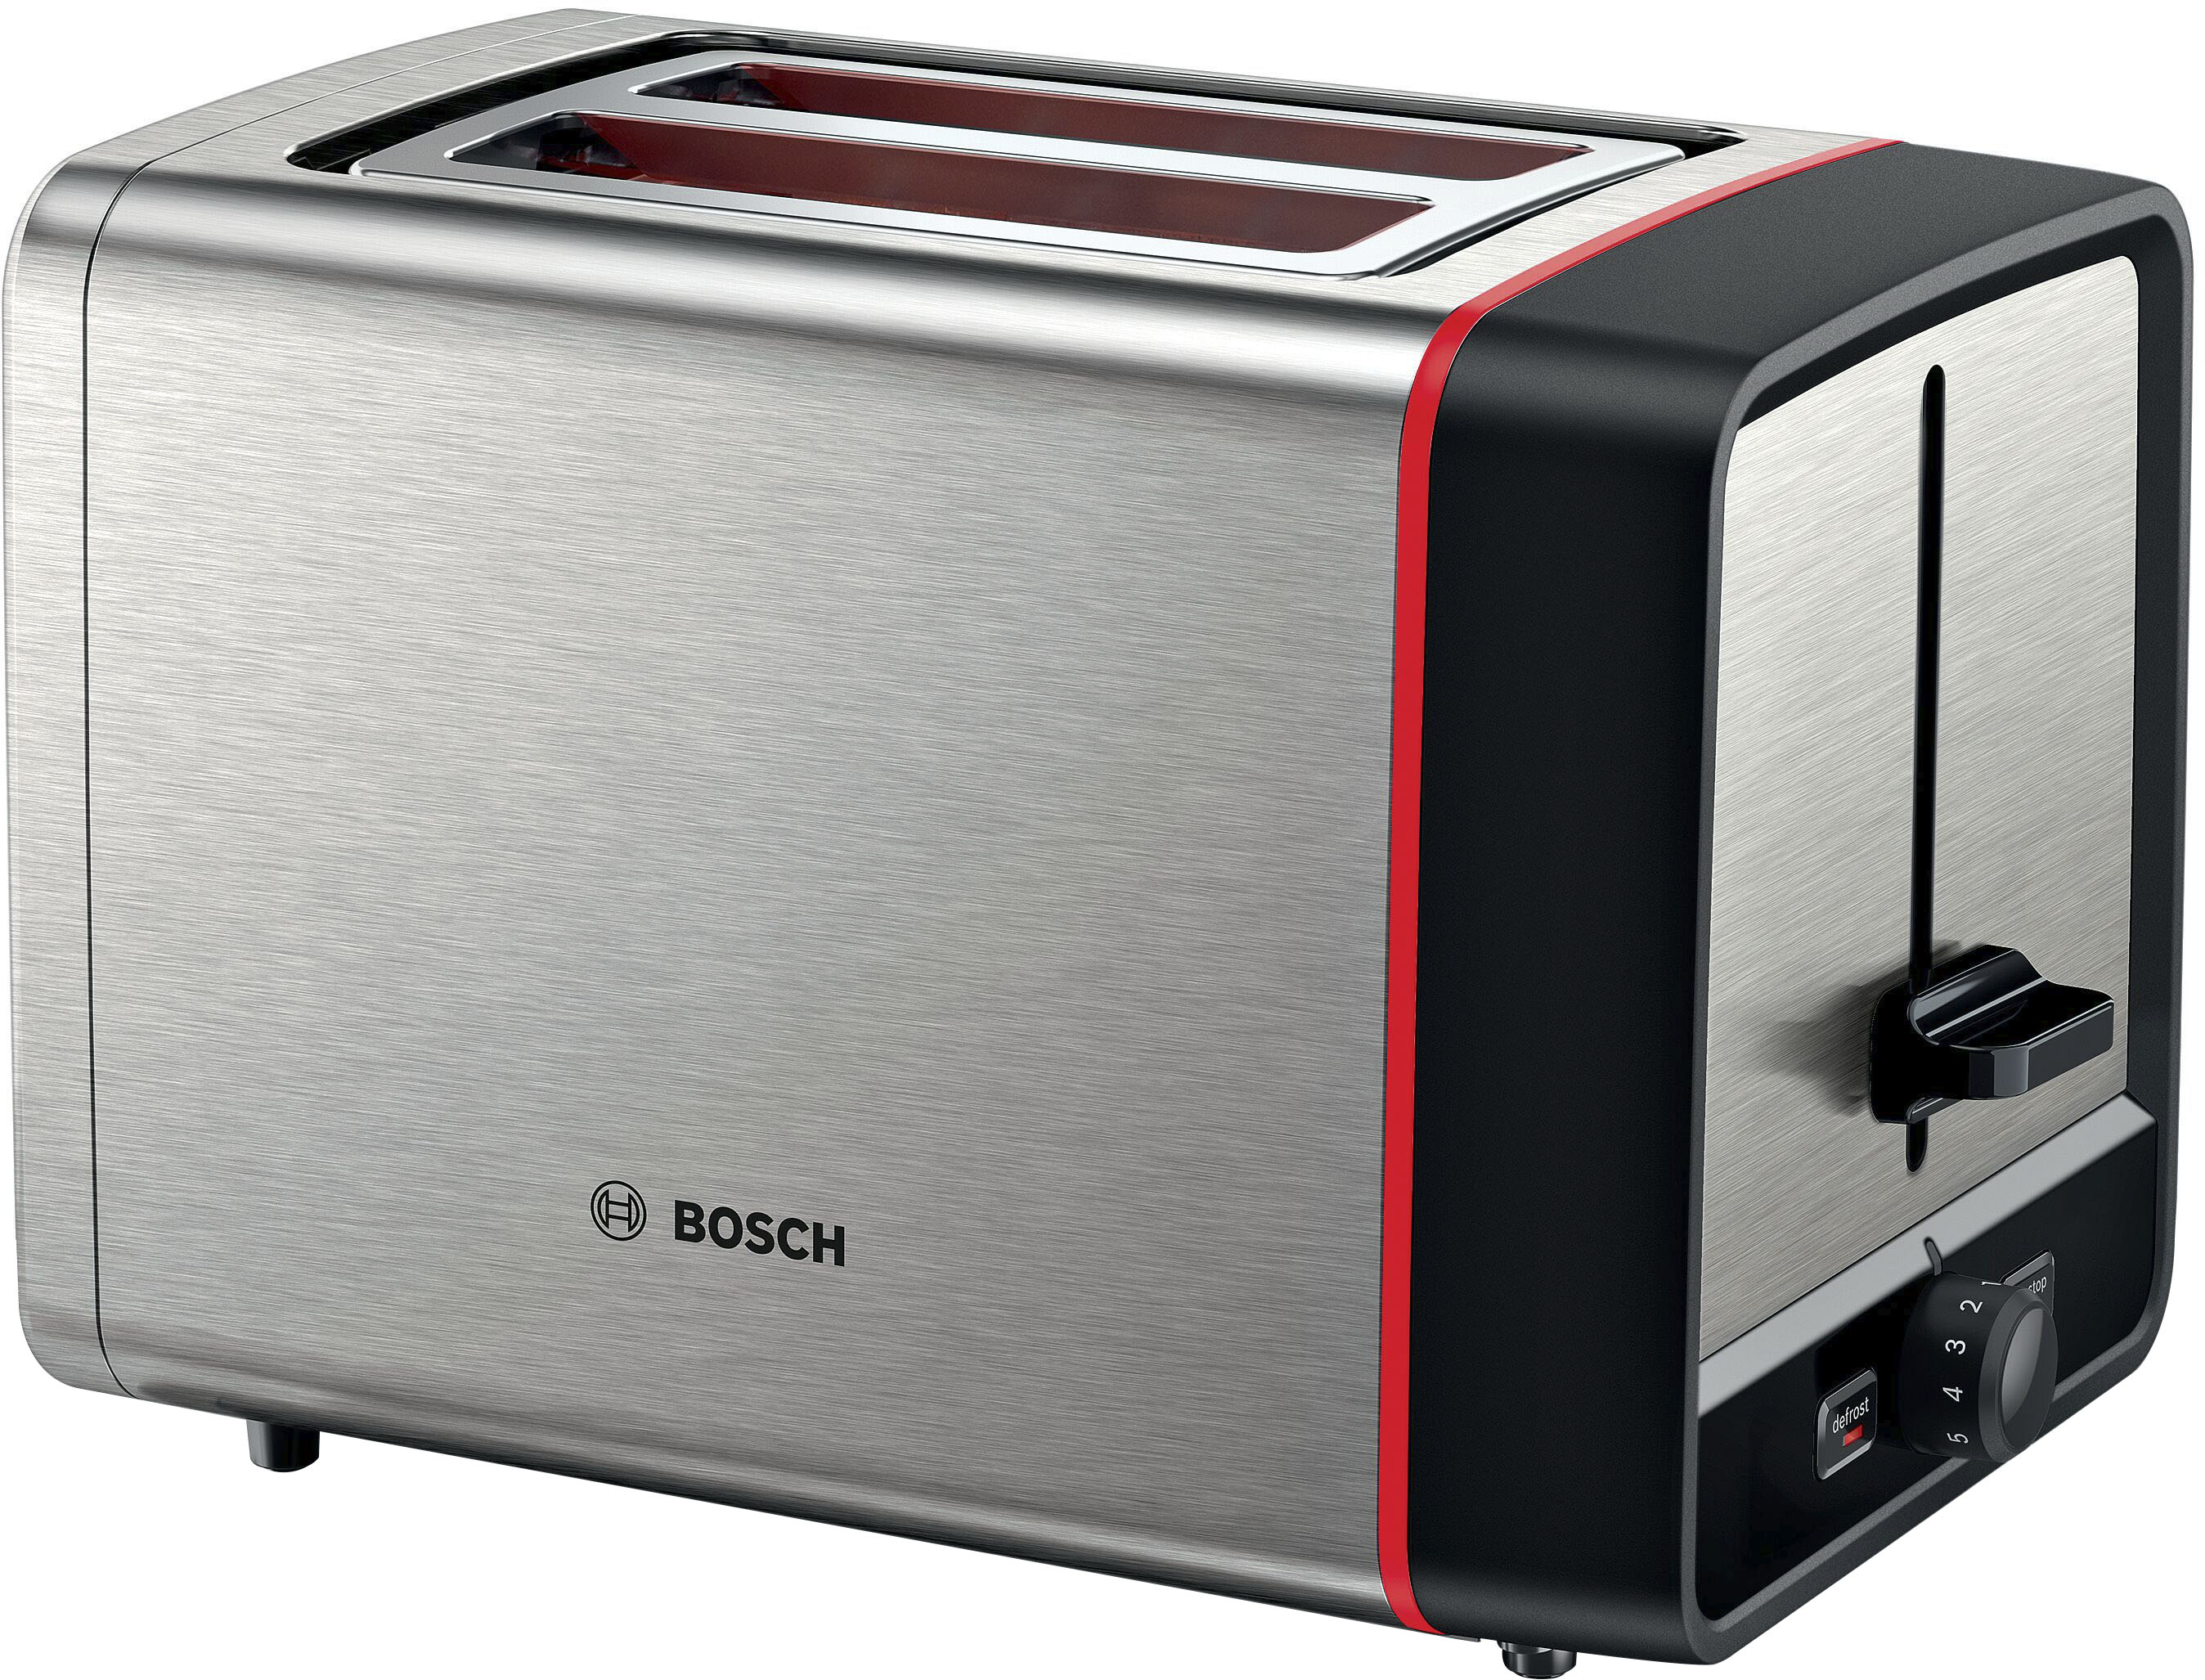 Bosch Kompakt Toaster MyMoment TAT6M420, 970 W, integr. Auftau-/Aufwärmfunktion, integrierter Brötchenaufsatz, Brotzentrierung, Edelstahl